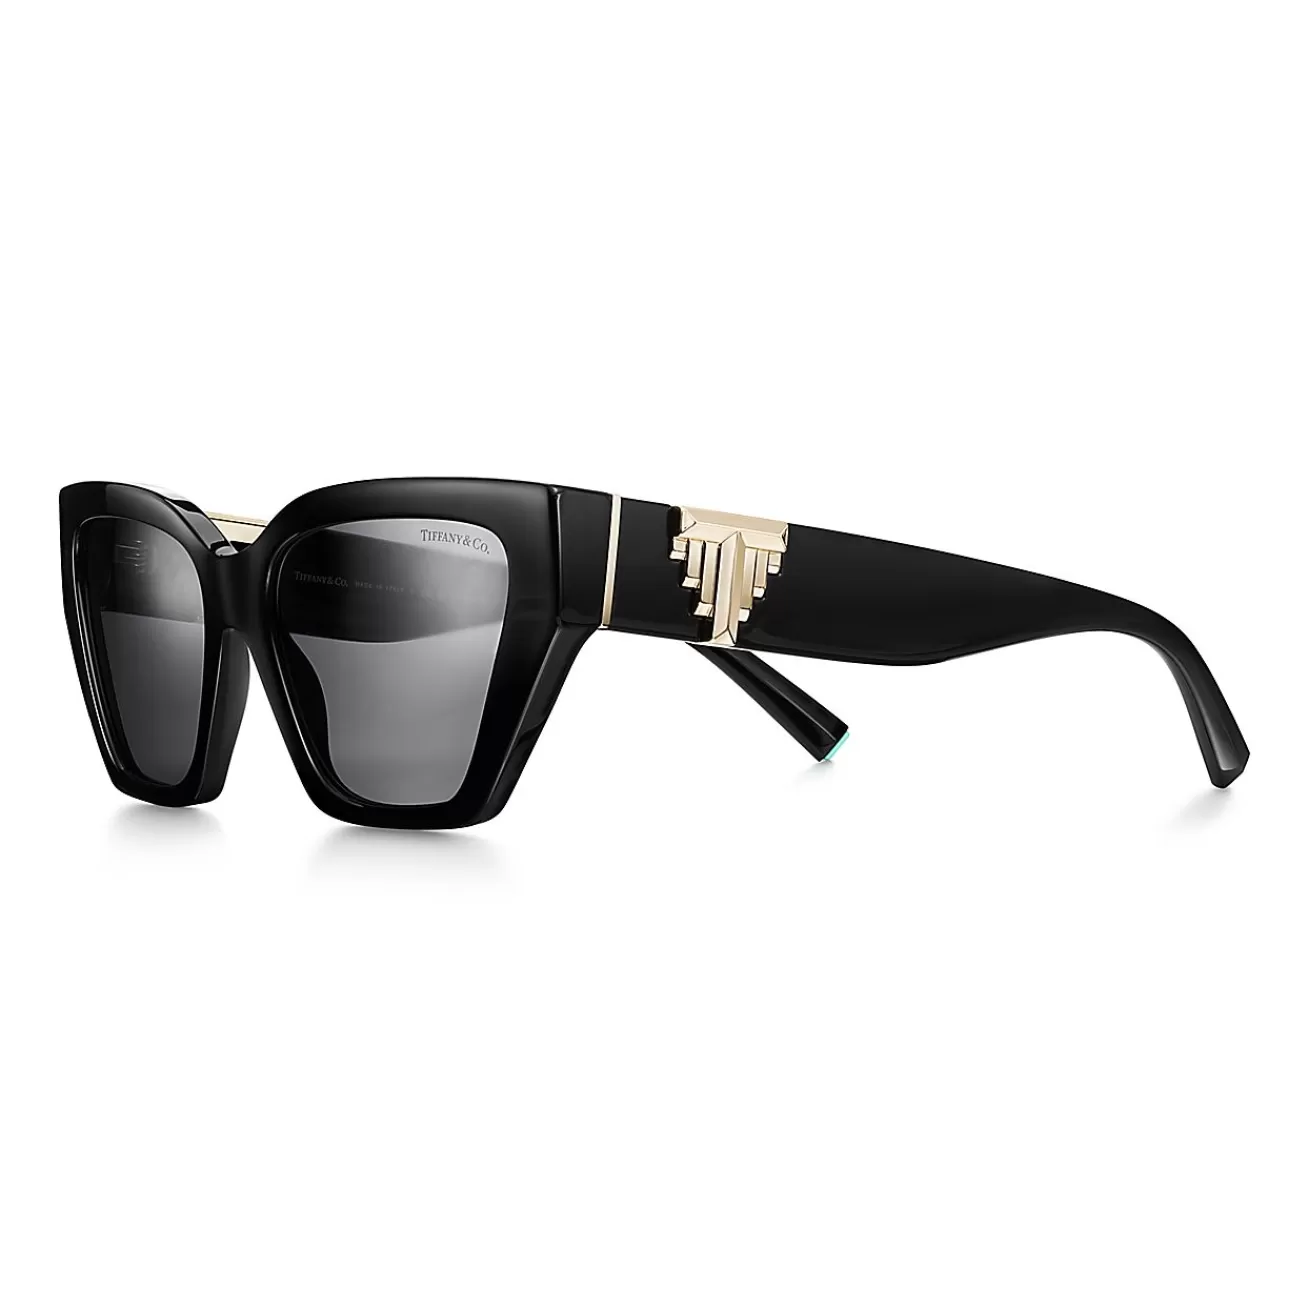 Tiffany & Co. Tiffany T Deco Sunglasses in Black Acetate, Gold-colored Metal and Gray Lenses | ^Women Tiffany T | Sunglasses